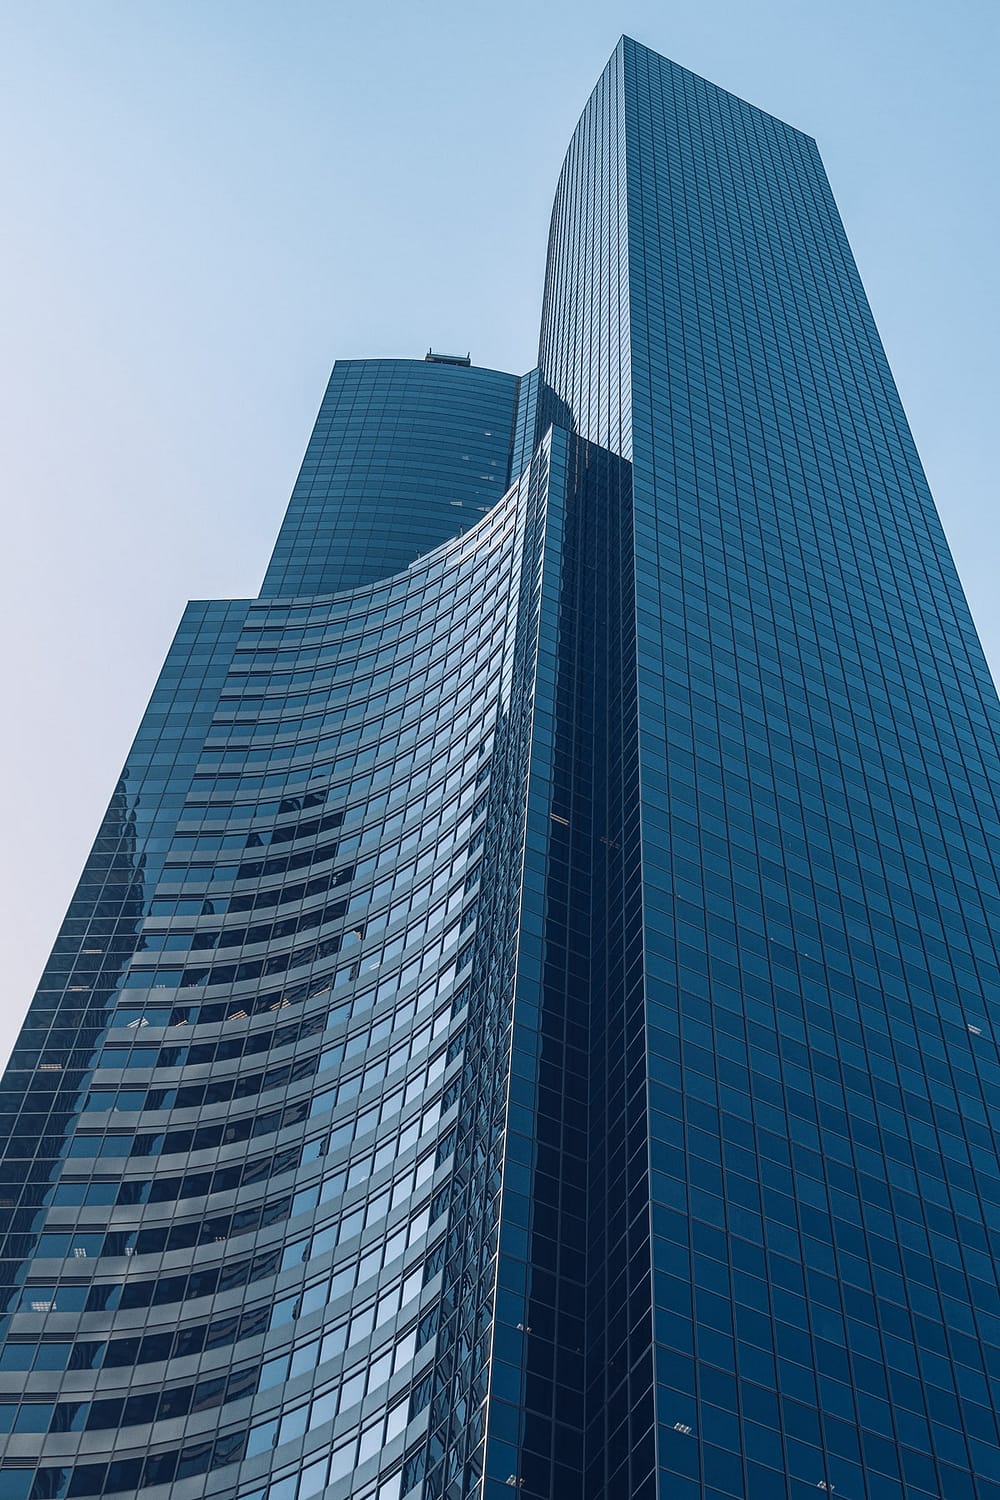 Seattle’s tallest building